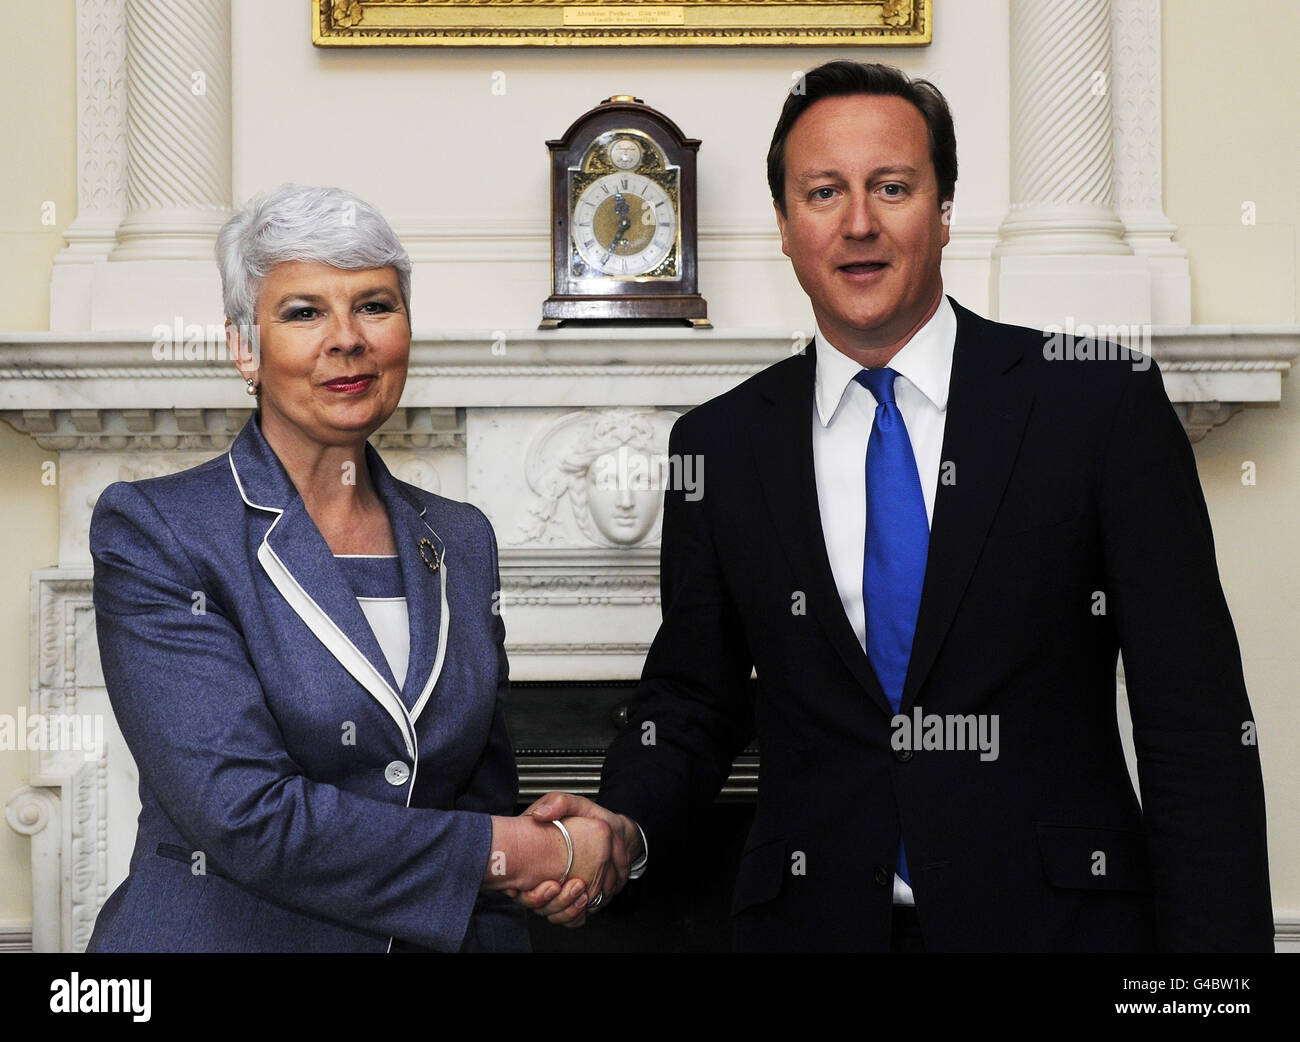 British Prime Minister David Cameron meets with Croatian Prime Minister Jadranka Kosor at 10 Downing Street, London. Stock Photo